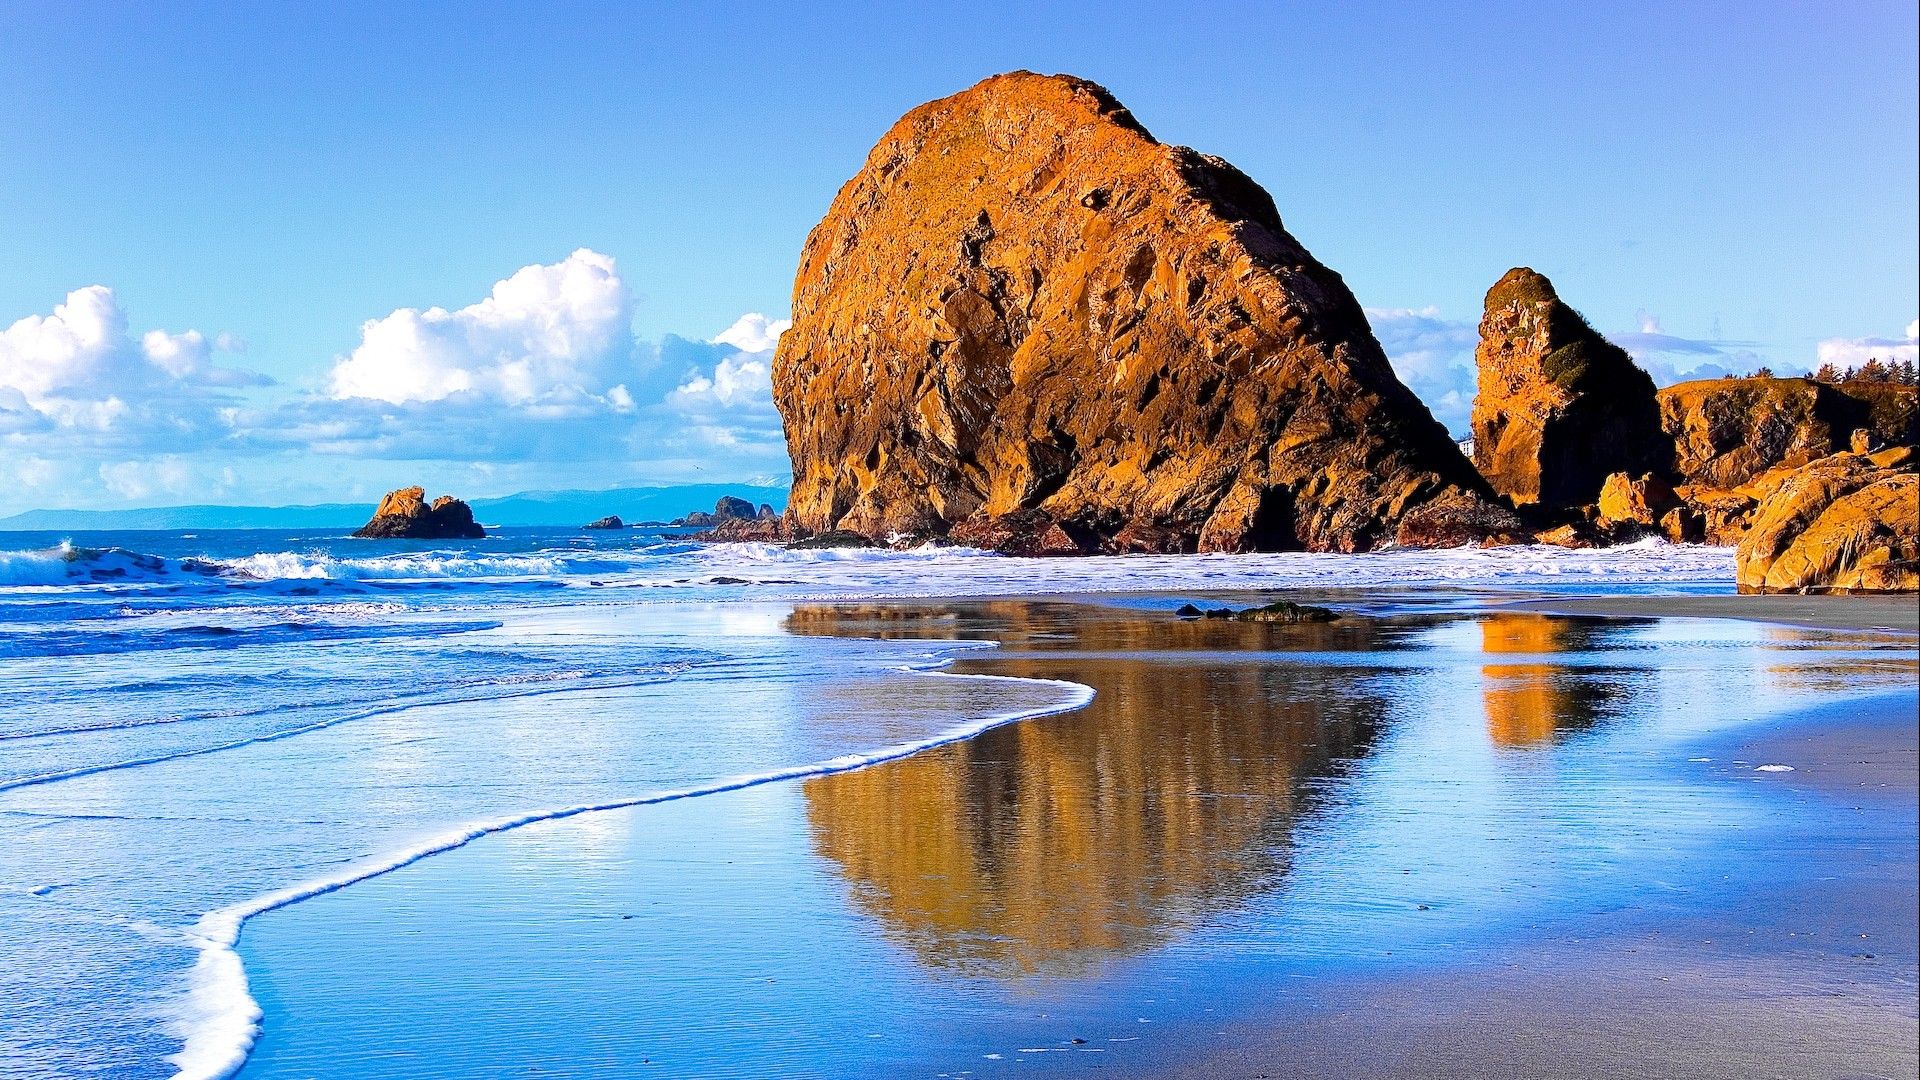 Download Beautiful Scenery Beach With Big Rock Wallpaper Free ...